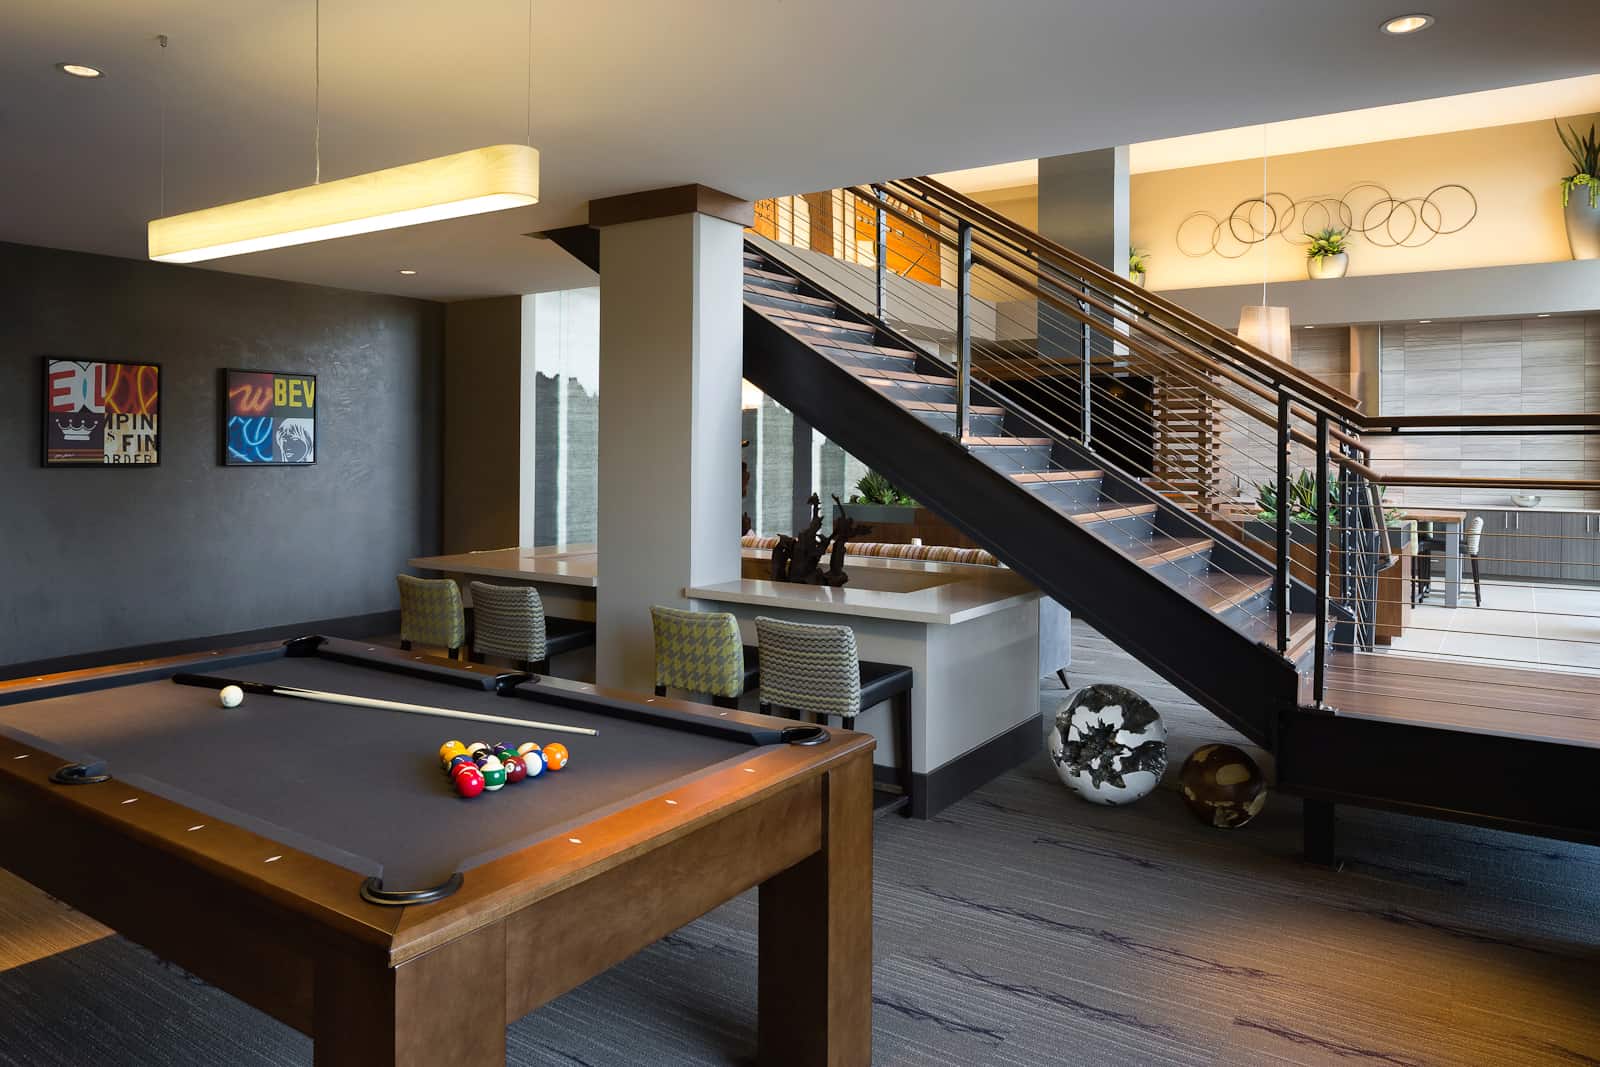 Loft House is a modern, boutique hotel-inspired community defined by open, loft...